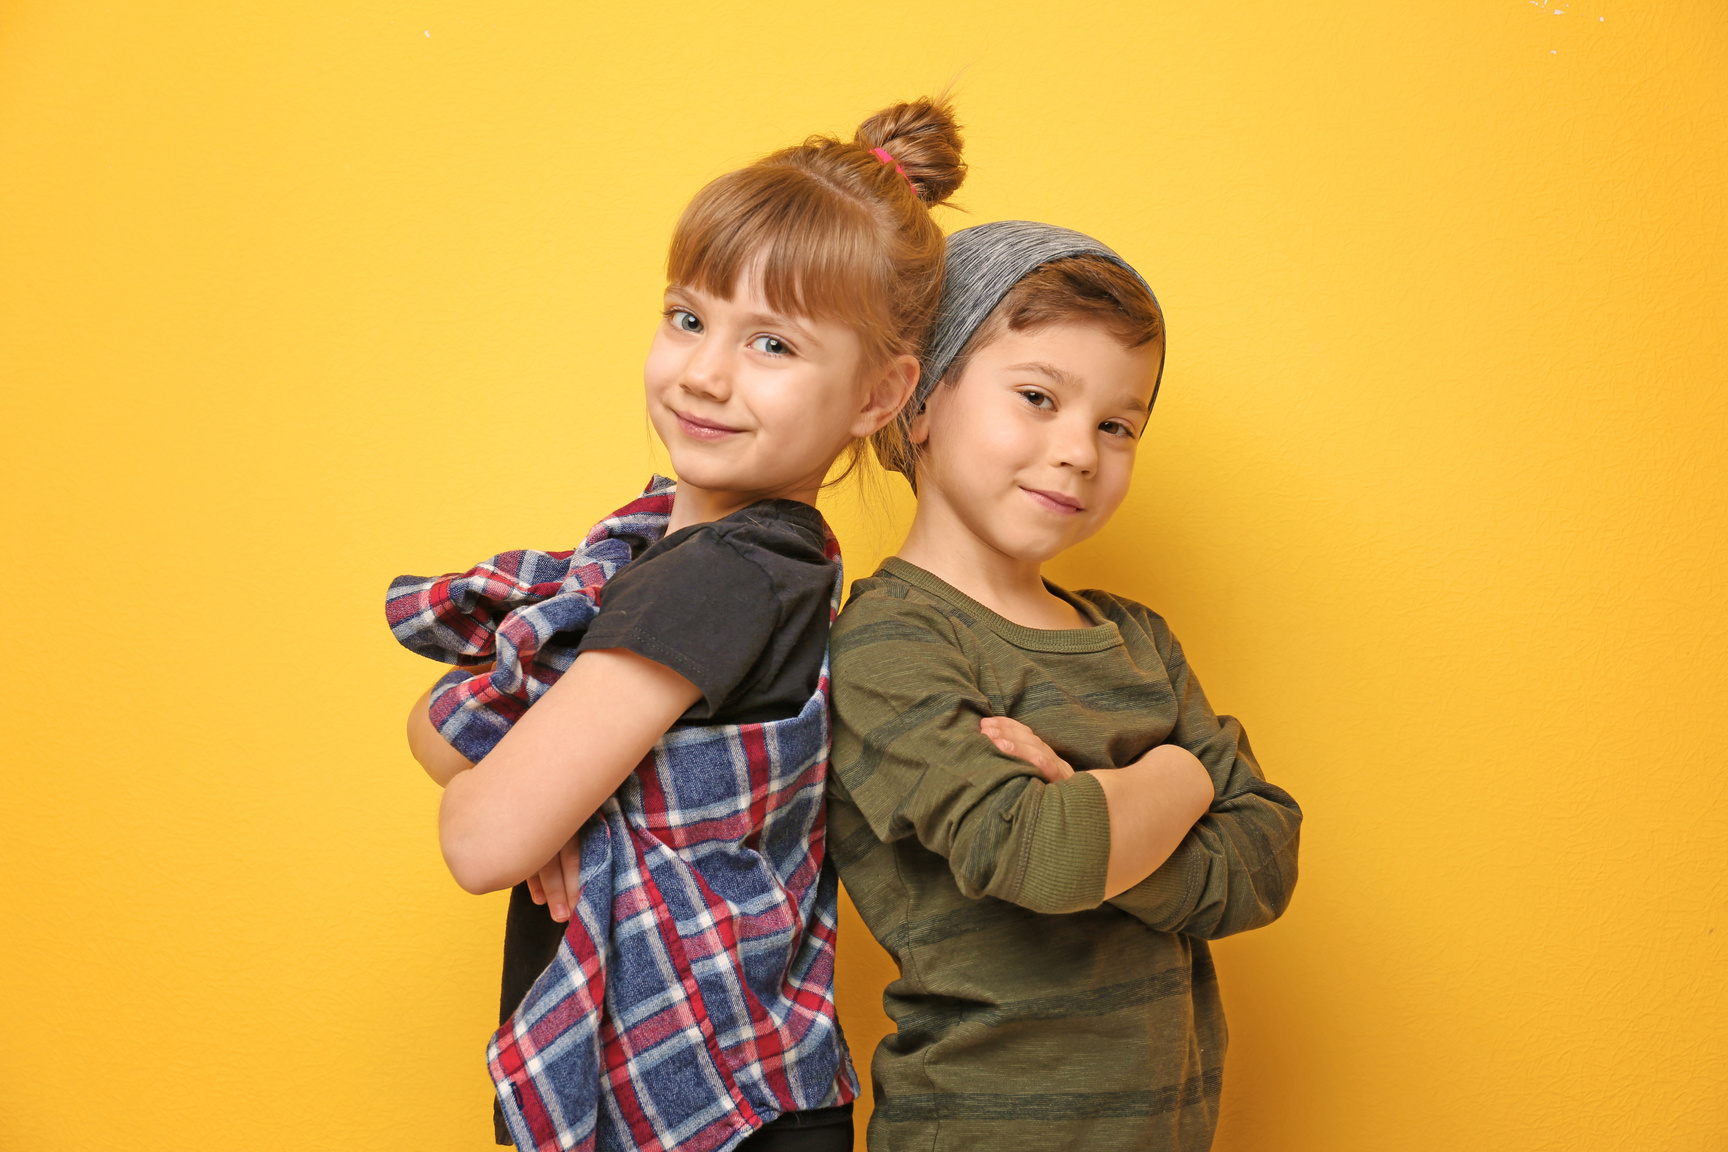 Stylish Children on Yellow Background